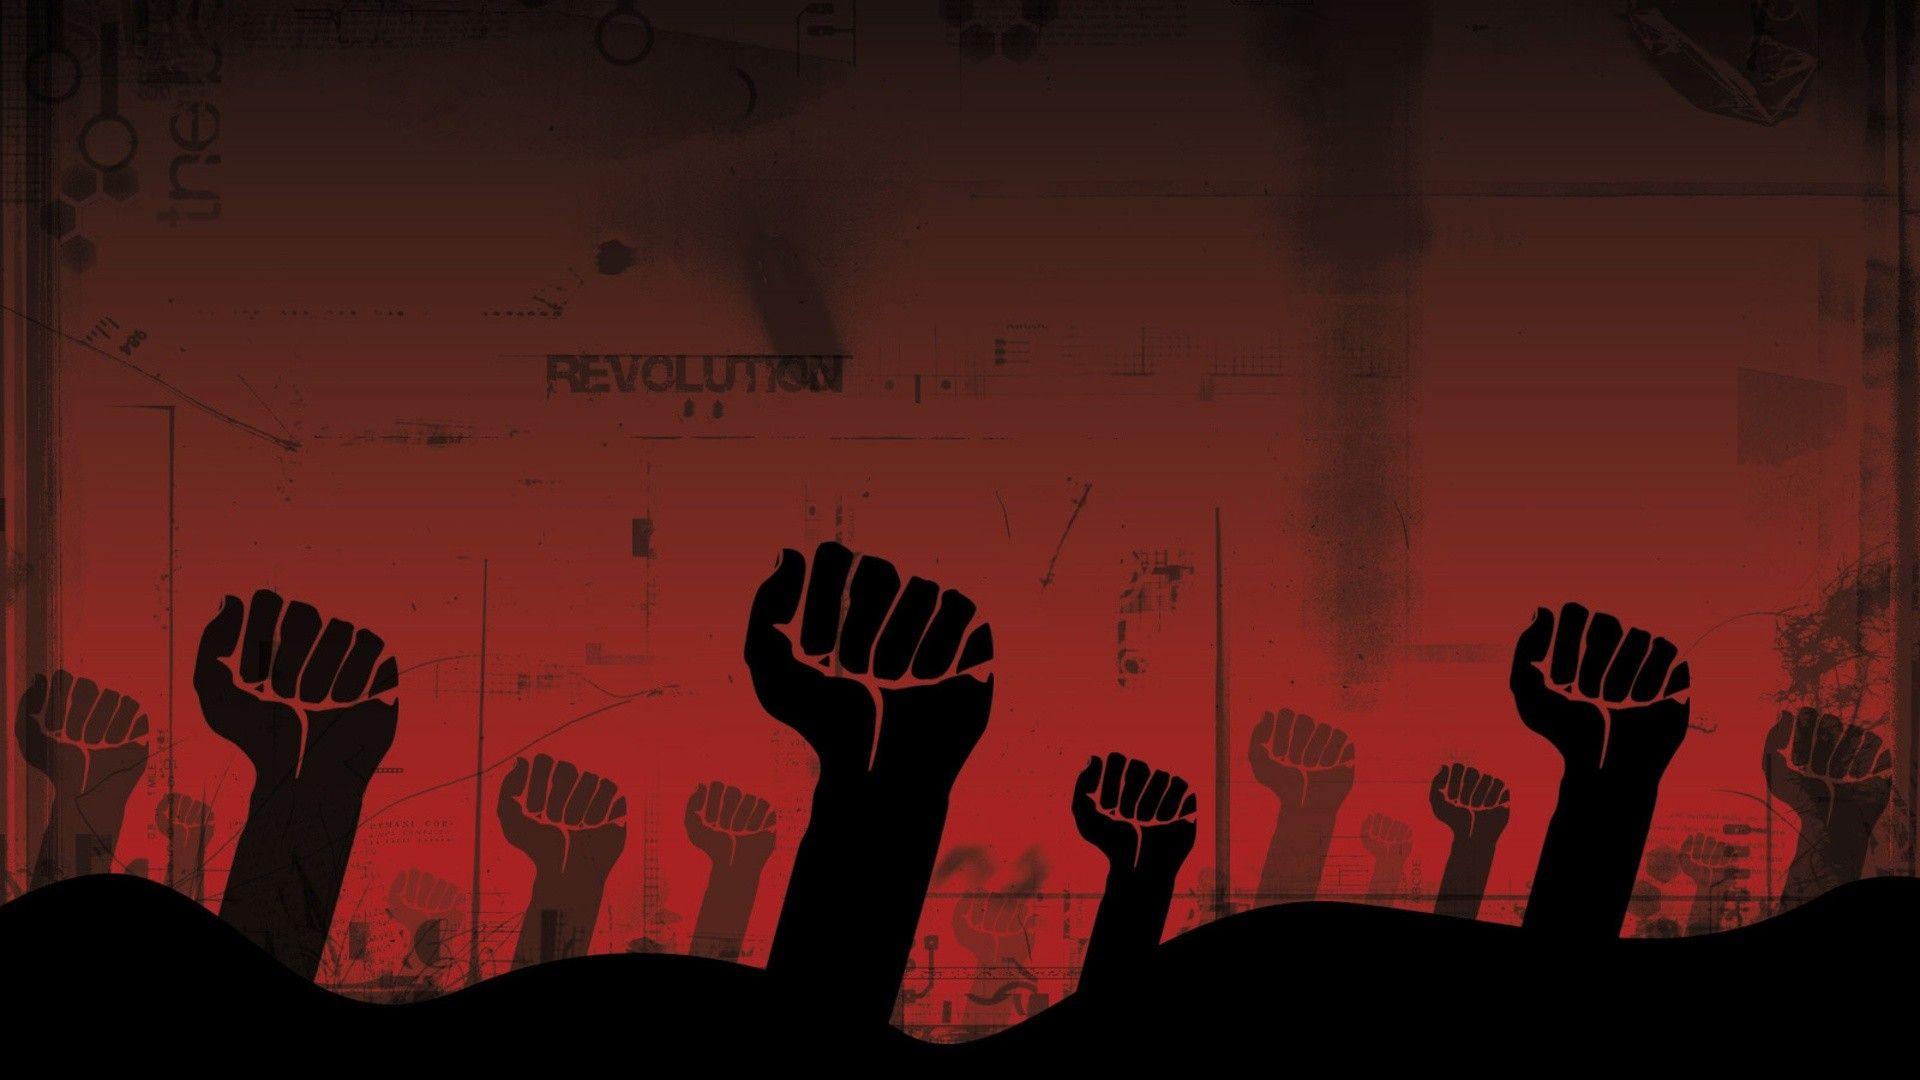 communism, black, freedom, red, revolution, protest, socialism